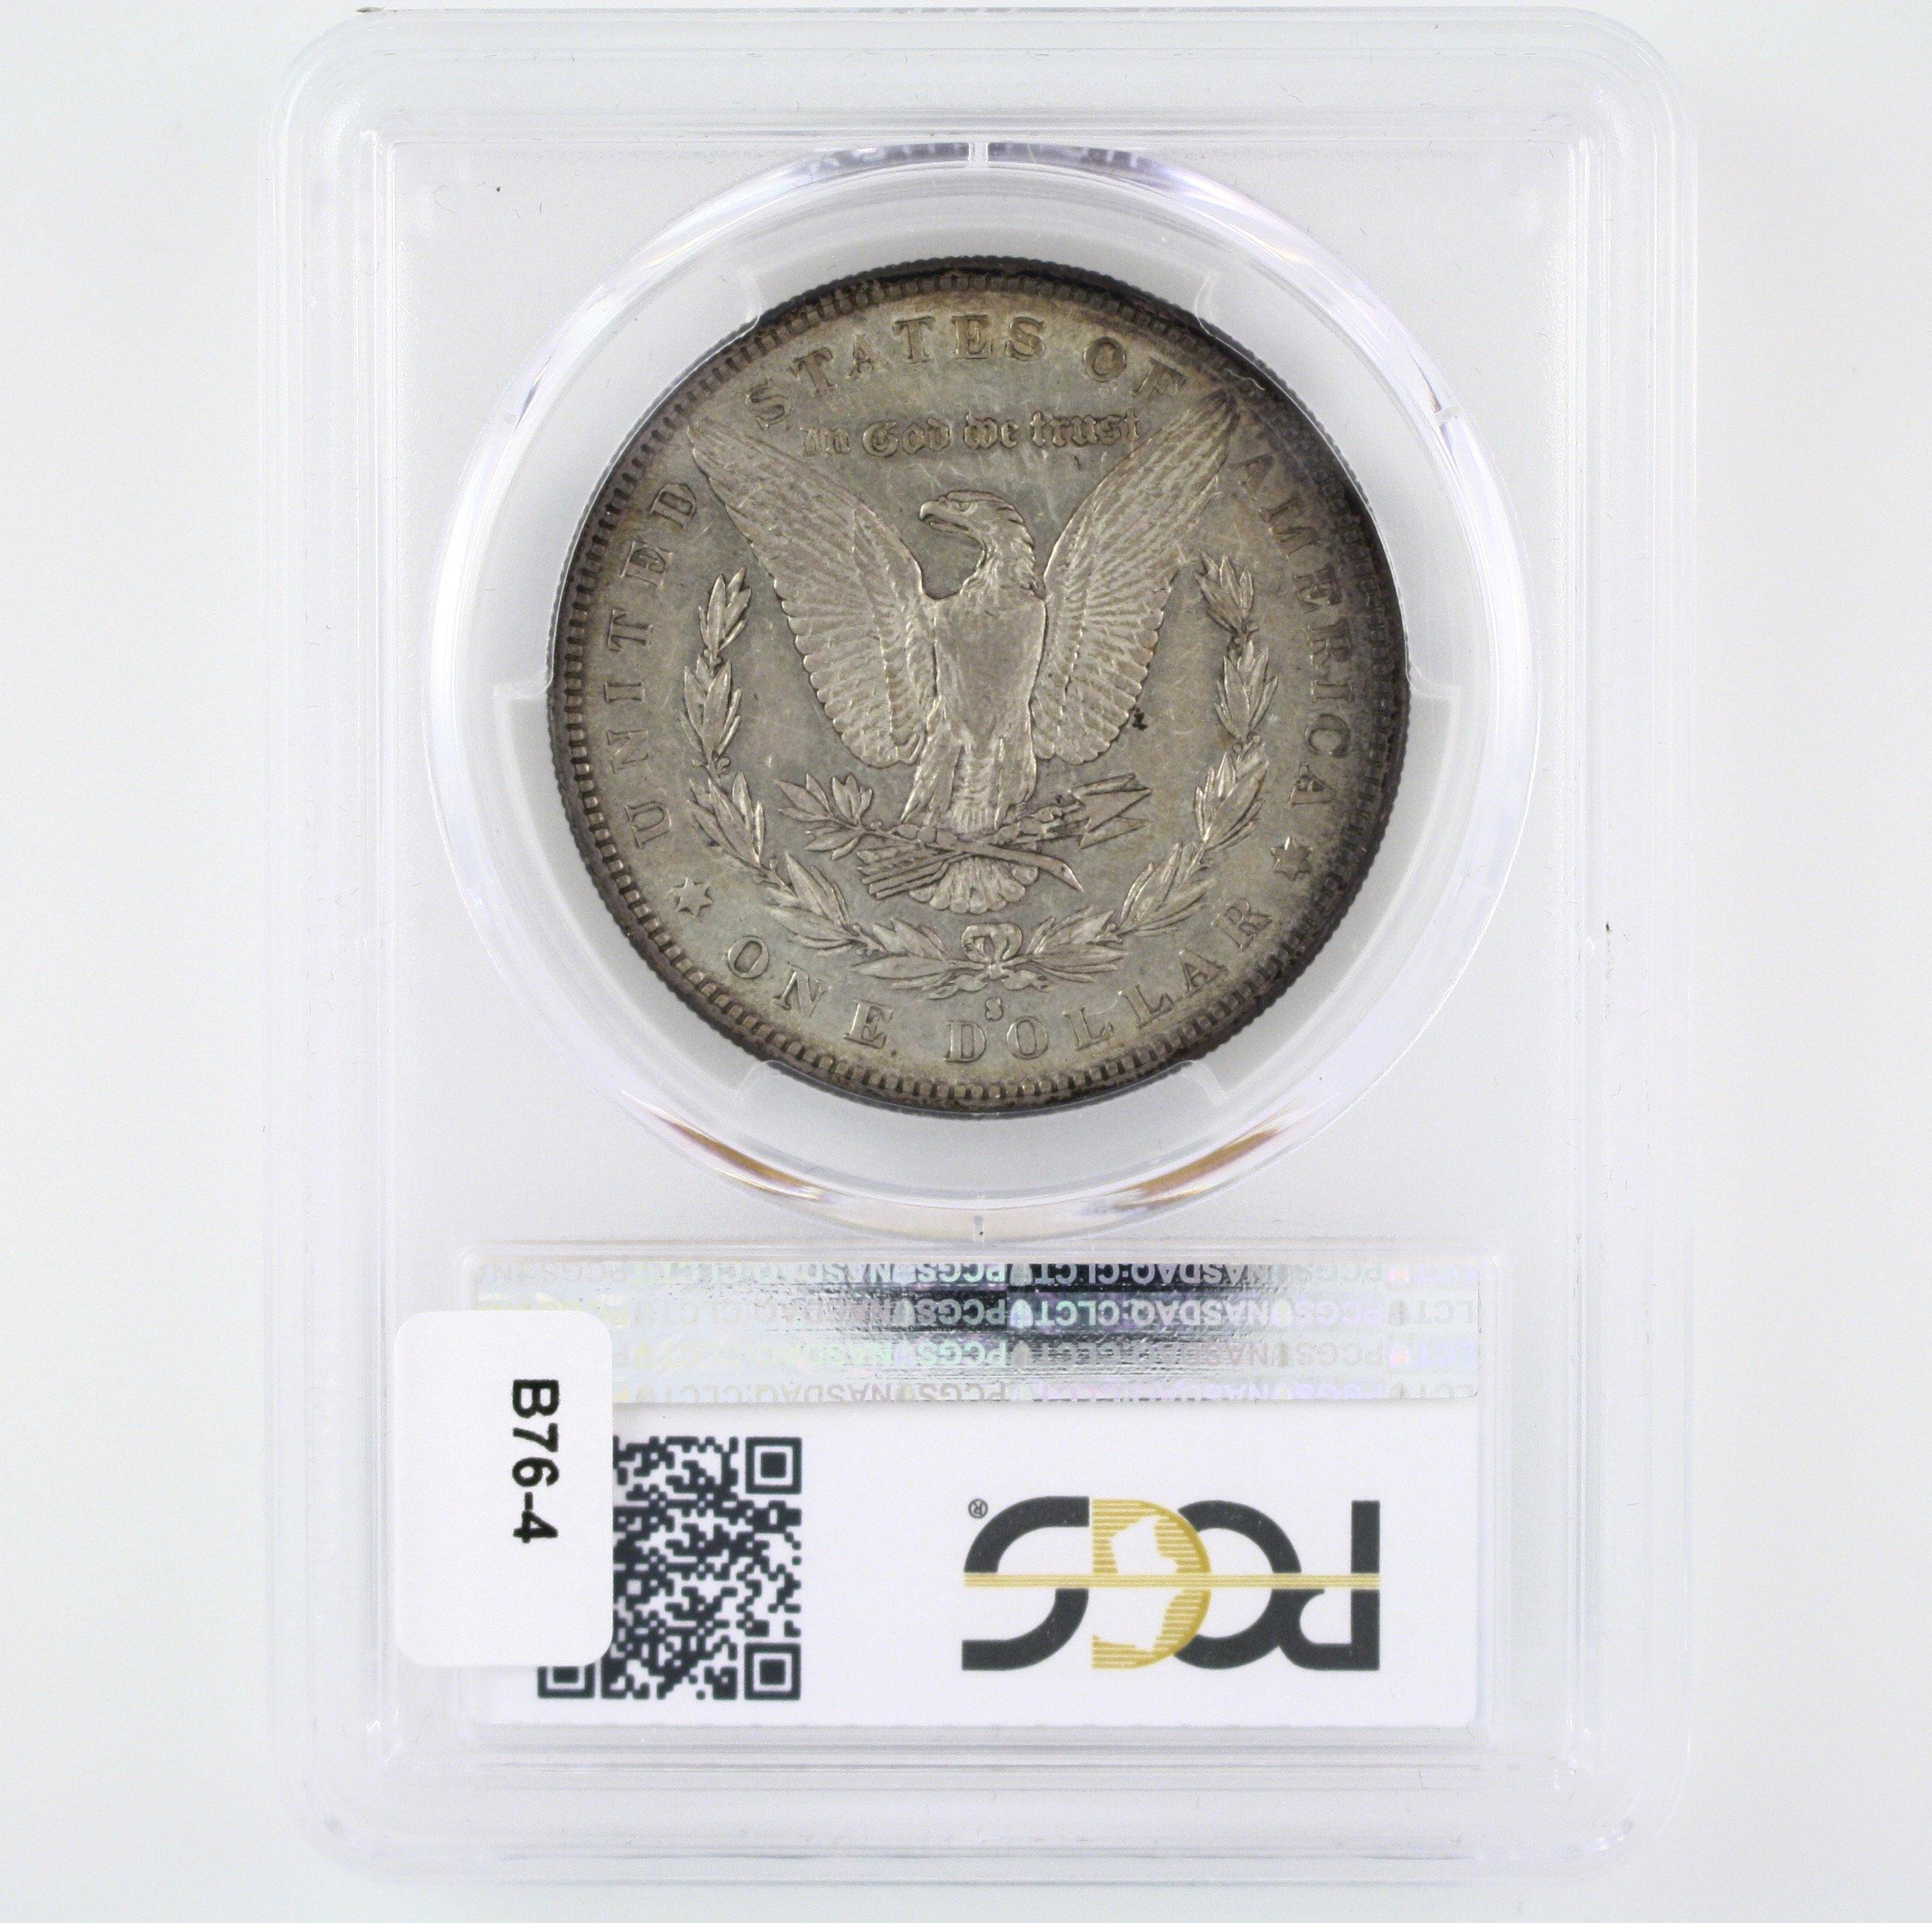 Certified 1883-S U.S. Morgan silver dollar